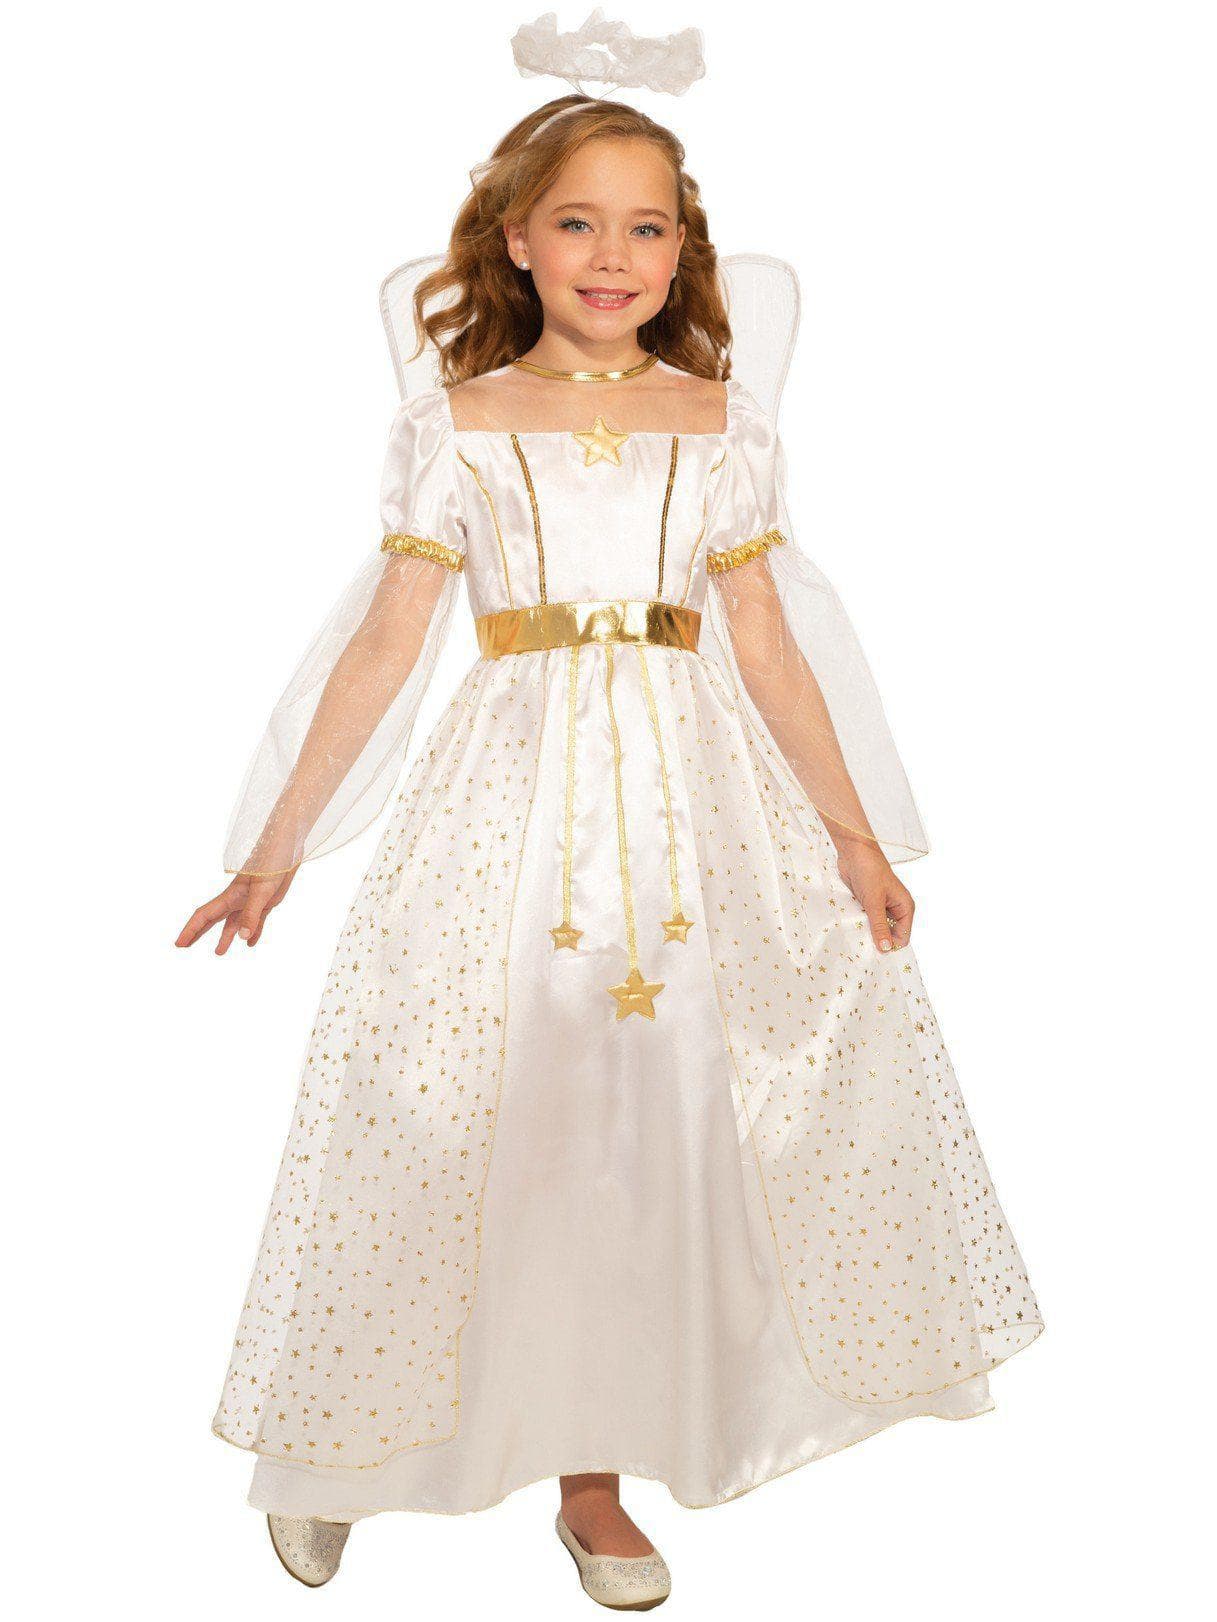 Kid's Sweet Angel Costume - costumes.com